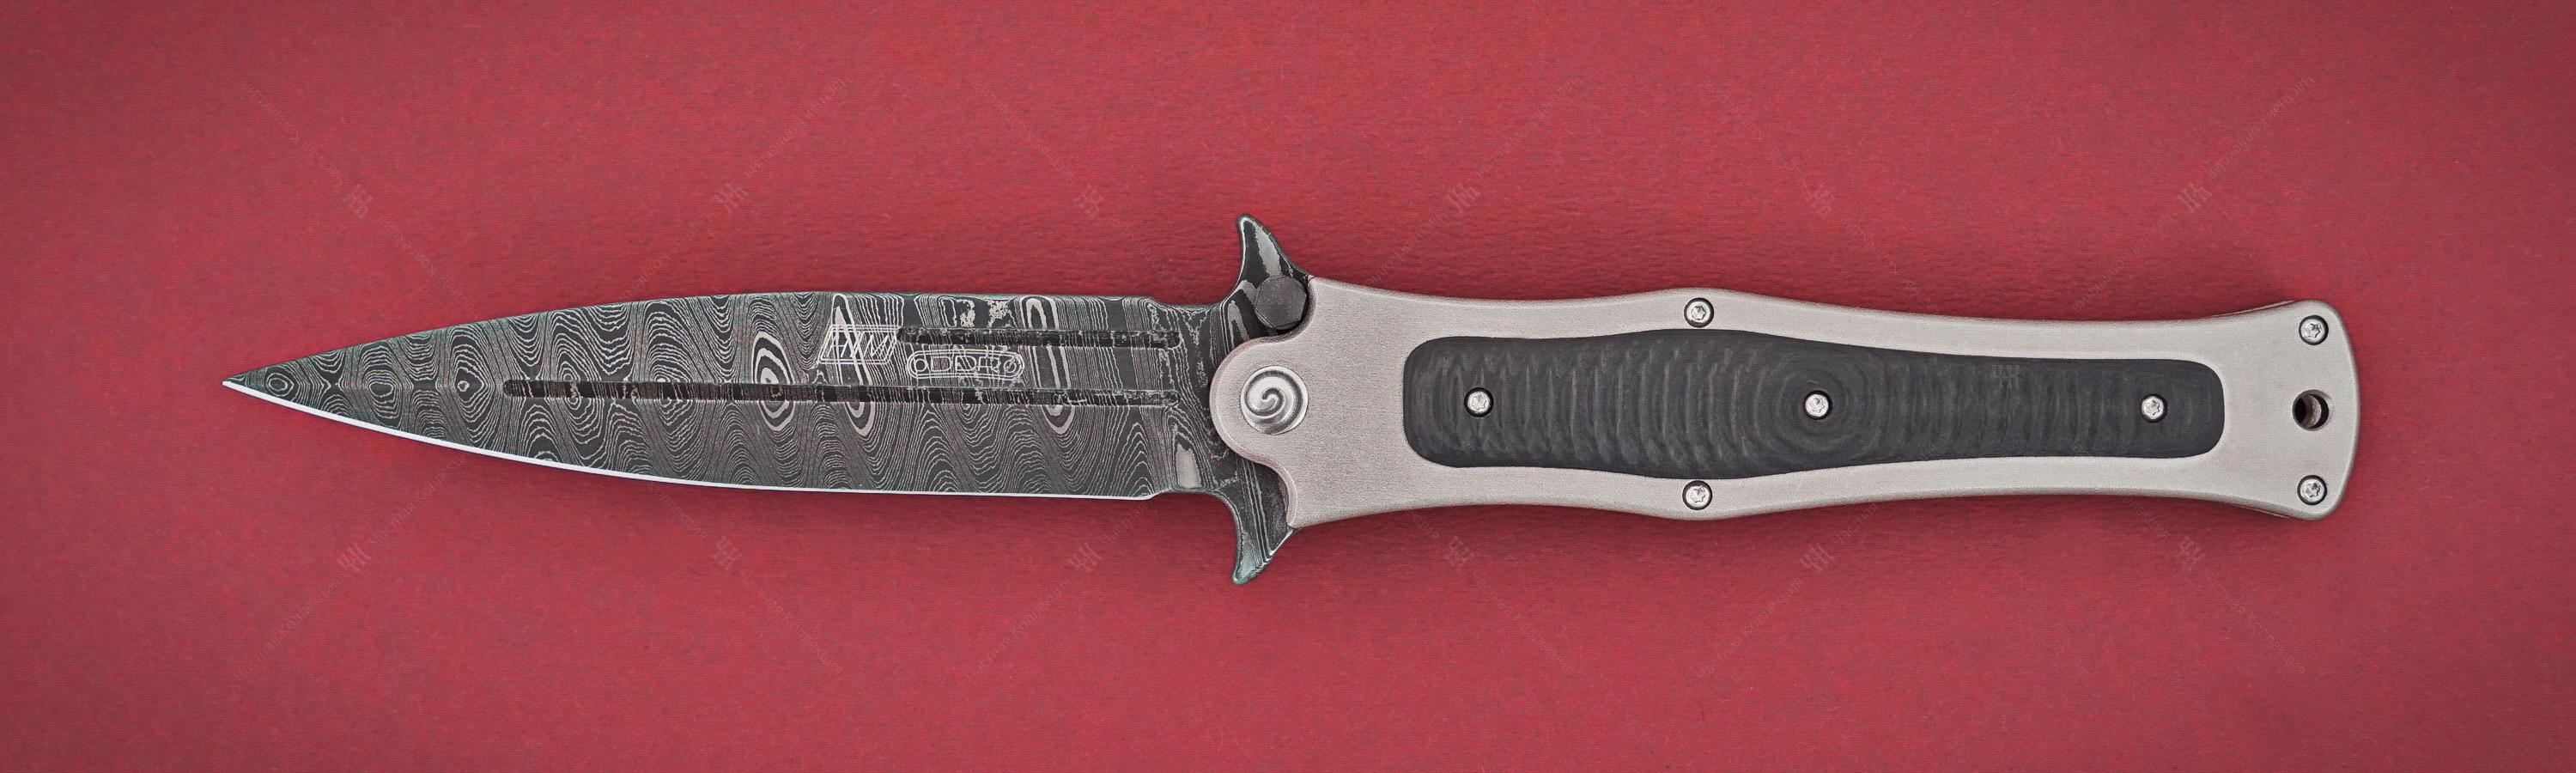 HTM нож Madd Maxx 5.5 Damascus